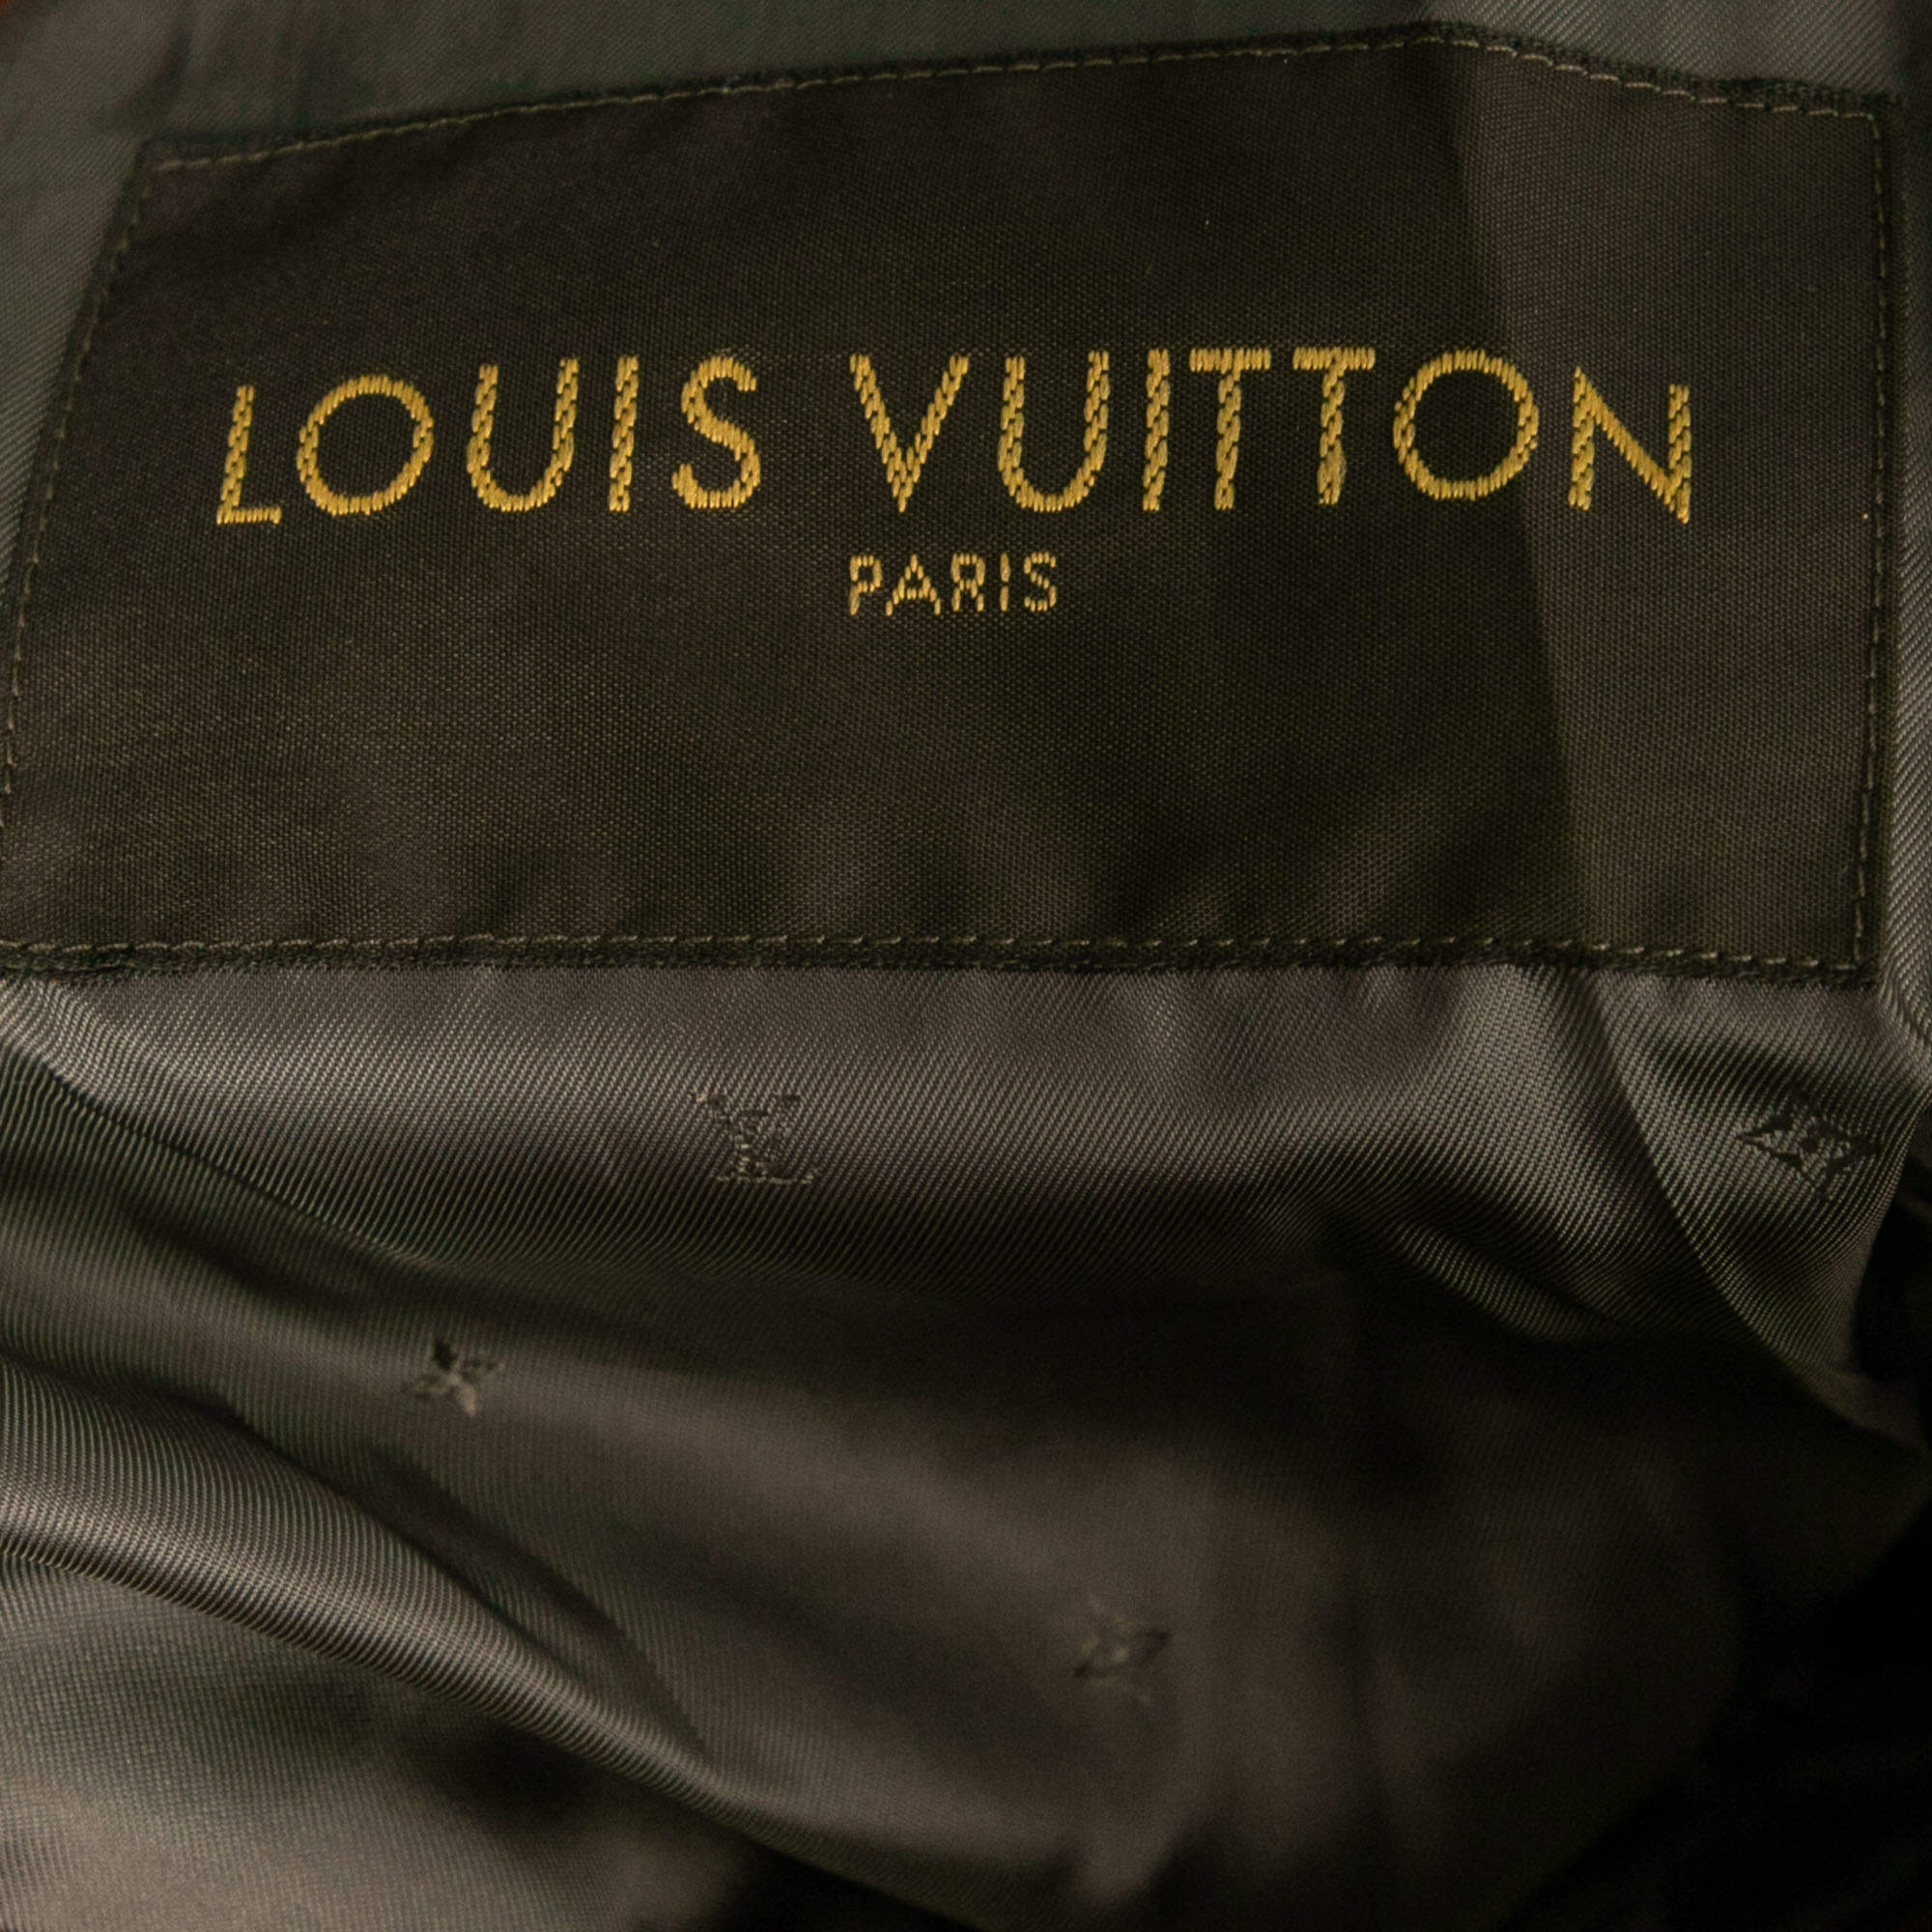 Louis Vuitton X Supreme Red Monogrammed Leather Bomber Jacket M Louis  Vuitton